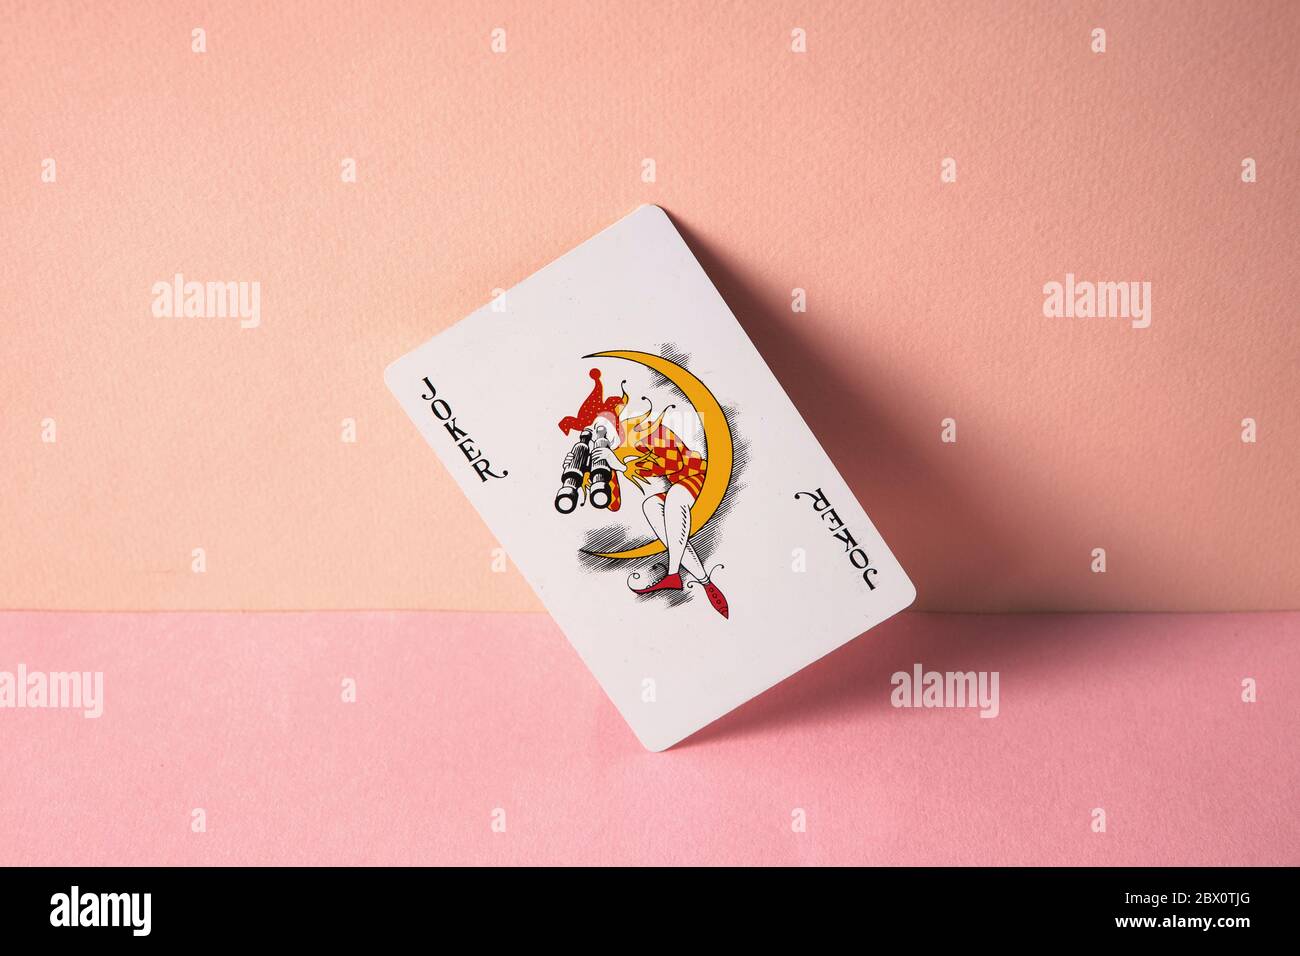 Joker playing card on pink background. Stock Photo